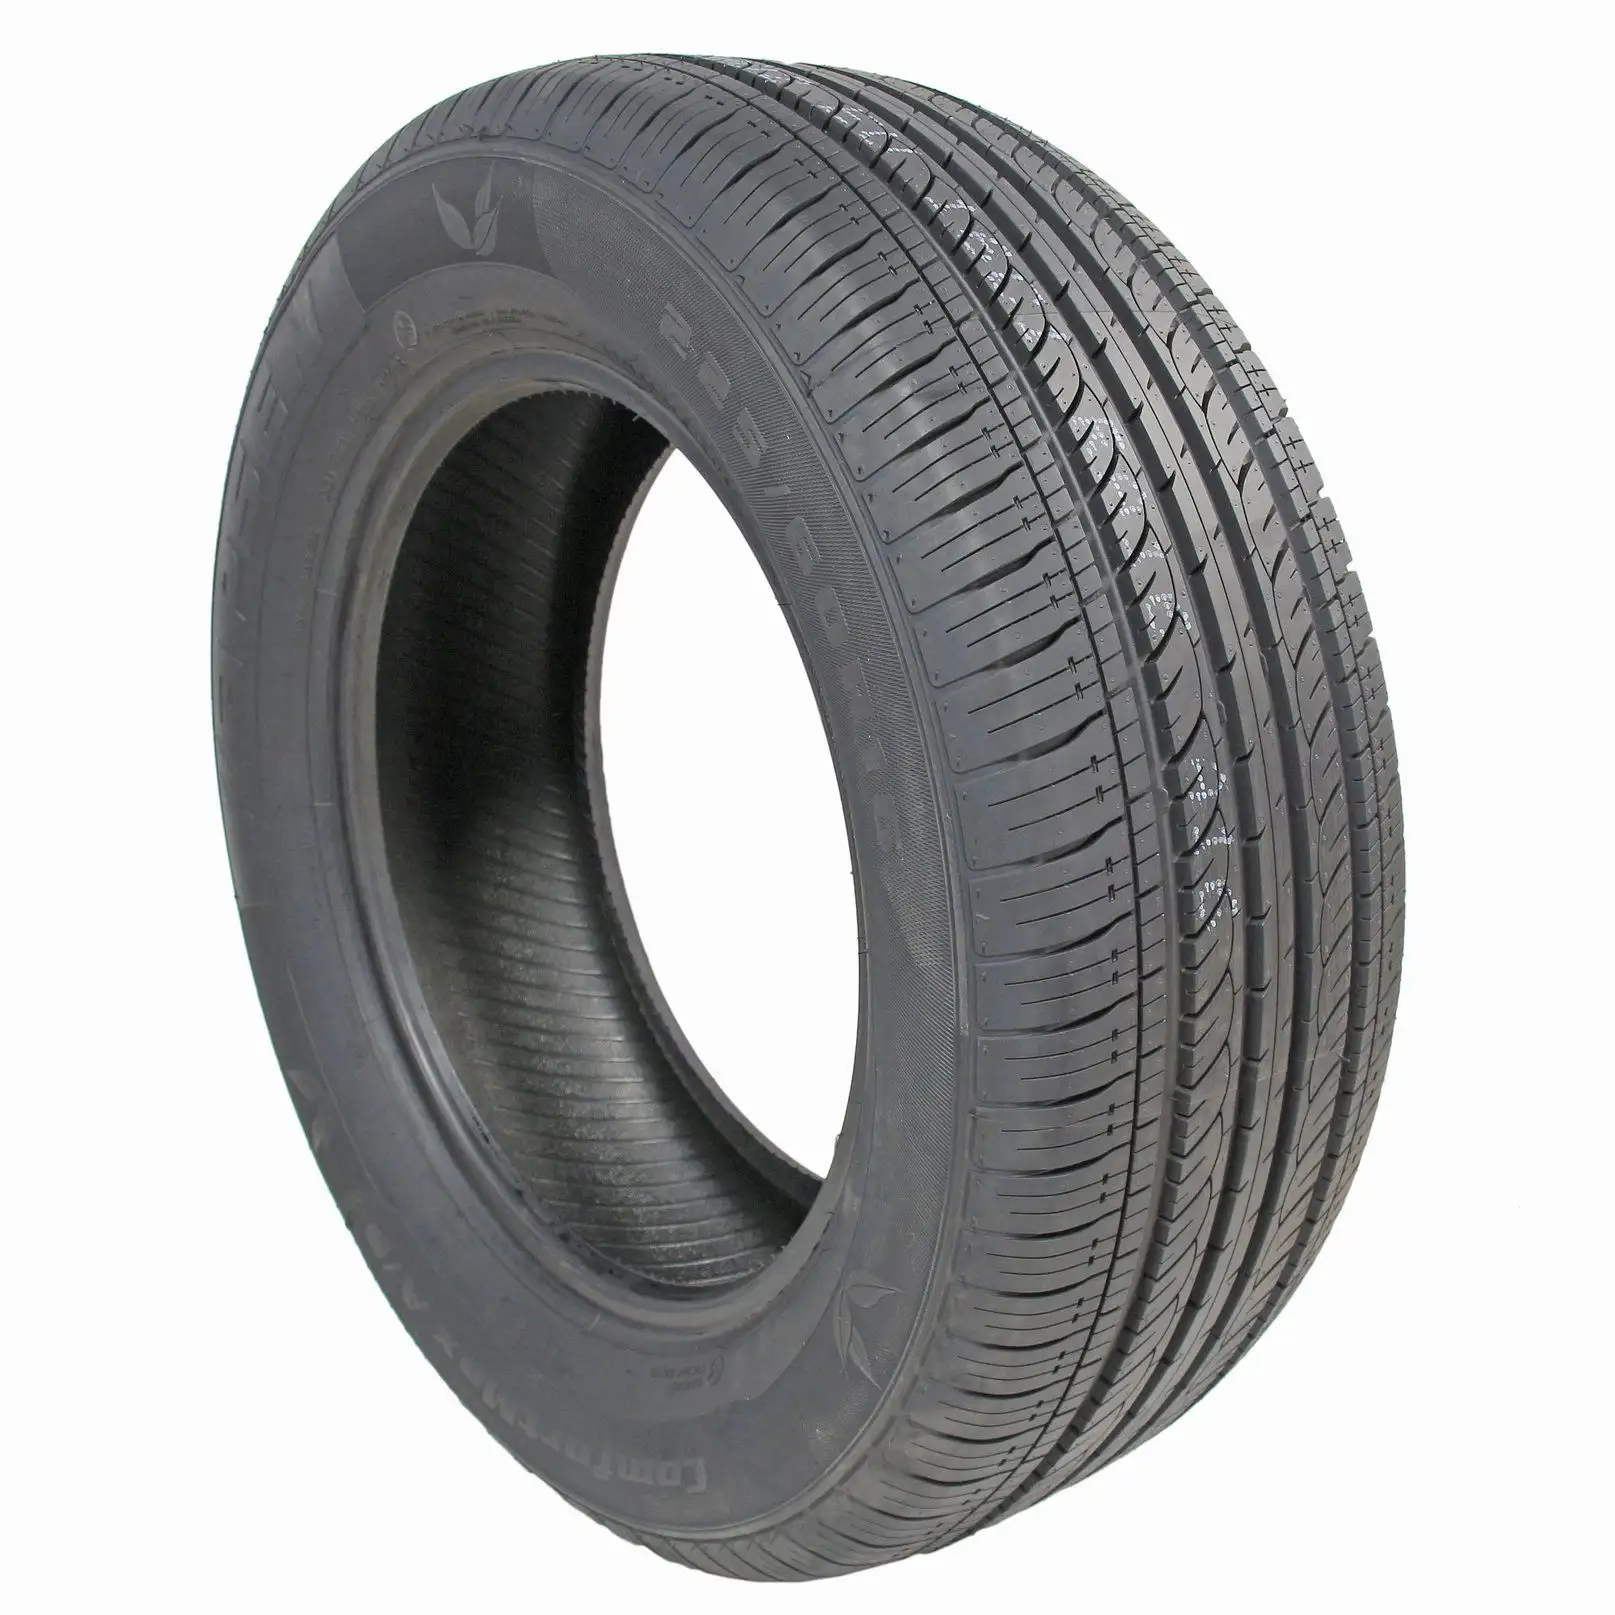 Deep tread depth cheaper price new tire for passenger vehicle car tires H202 175/65R14 Four seasons design tyres